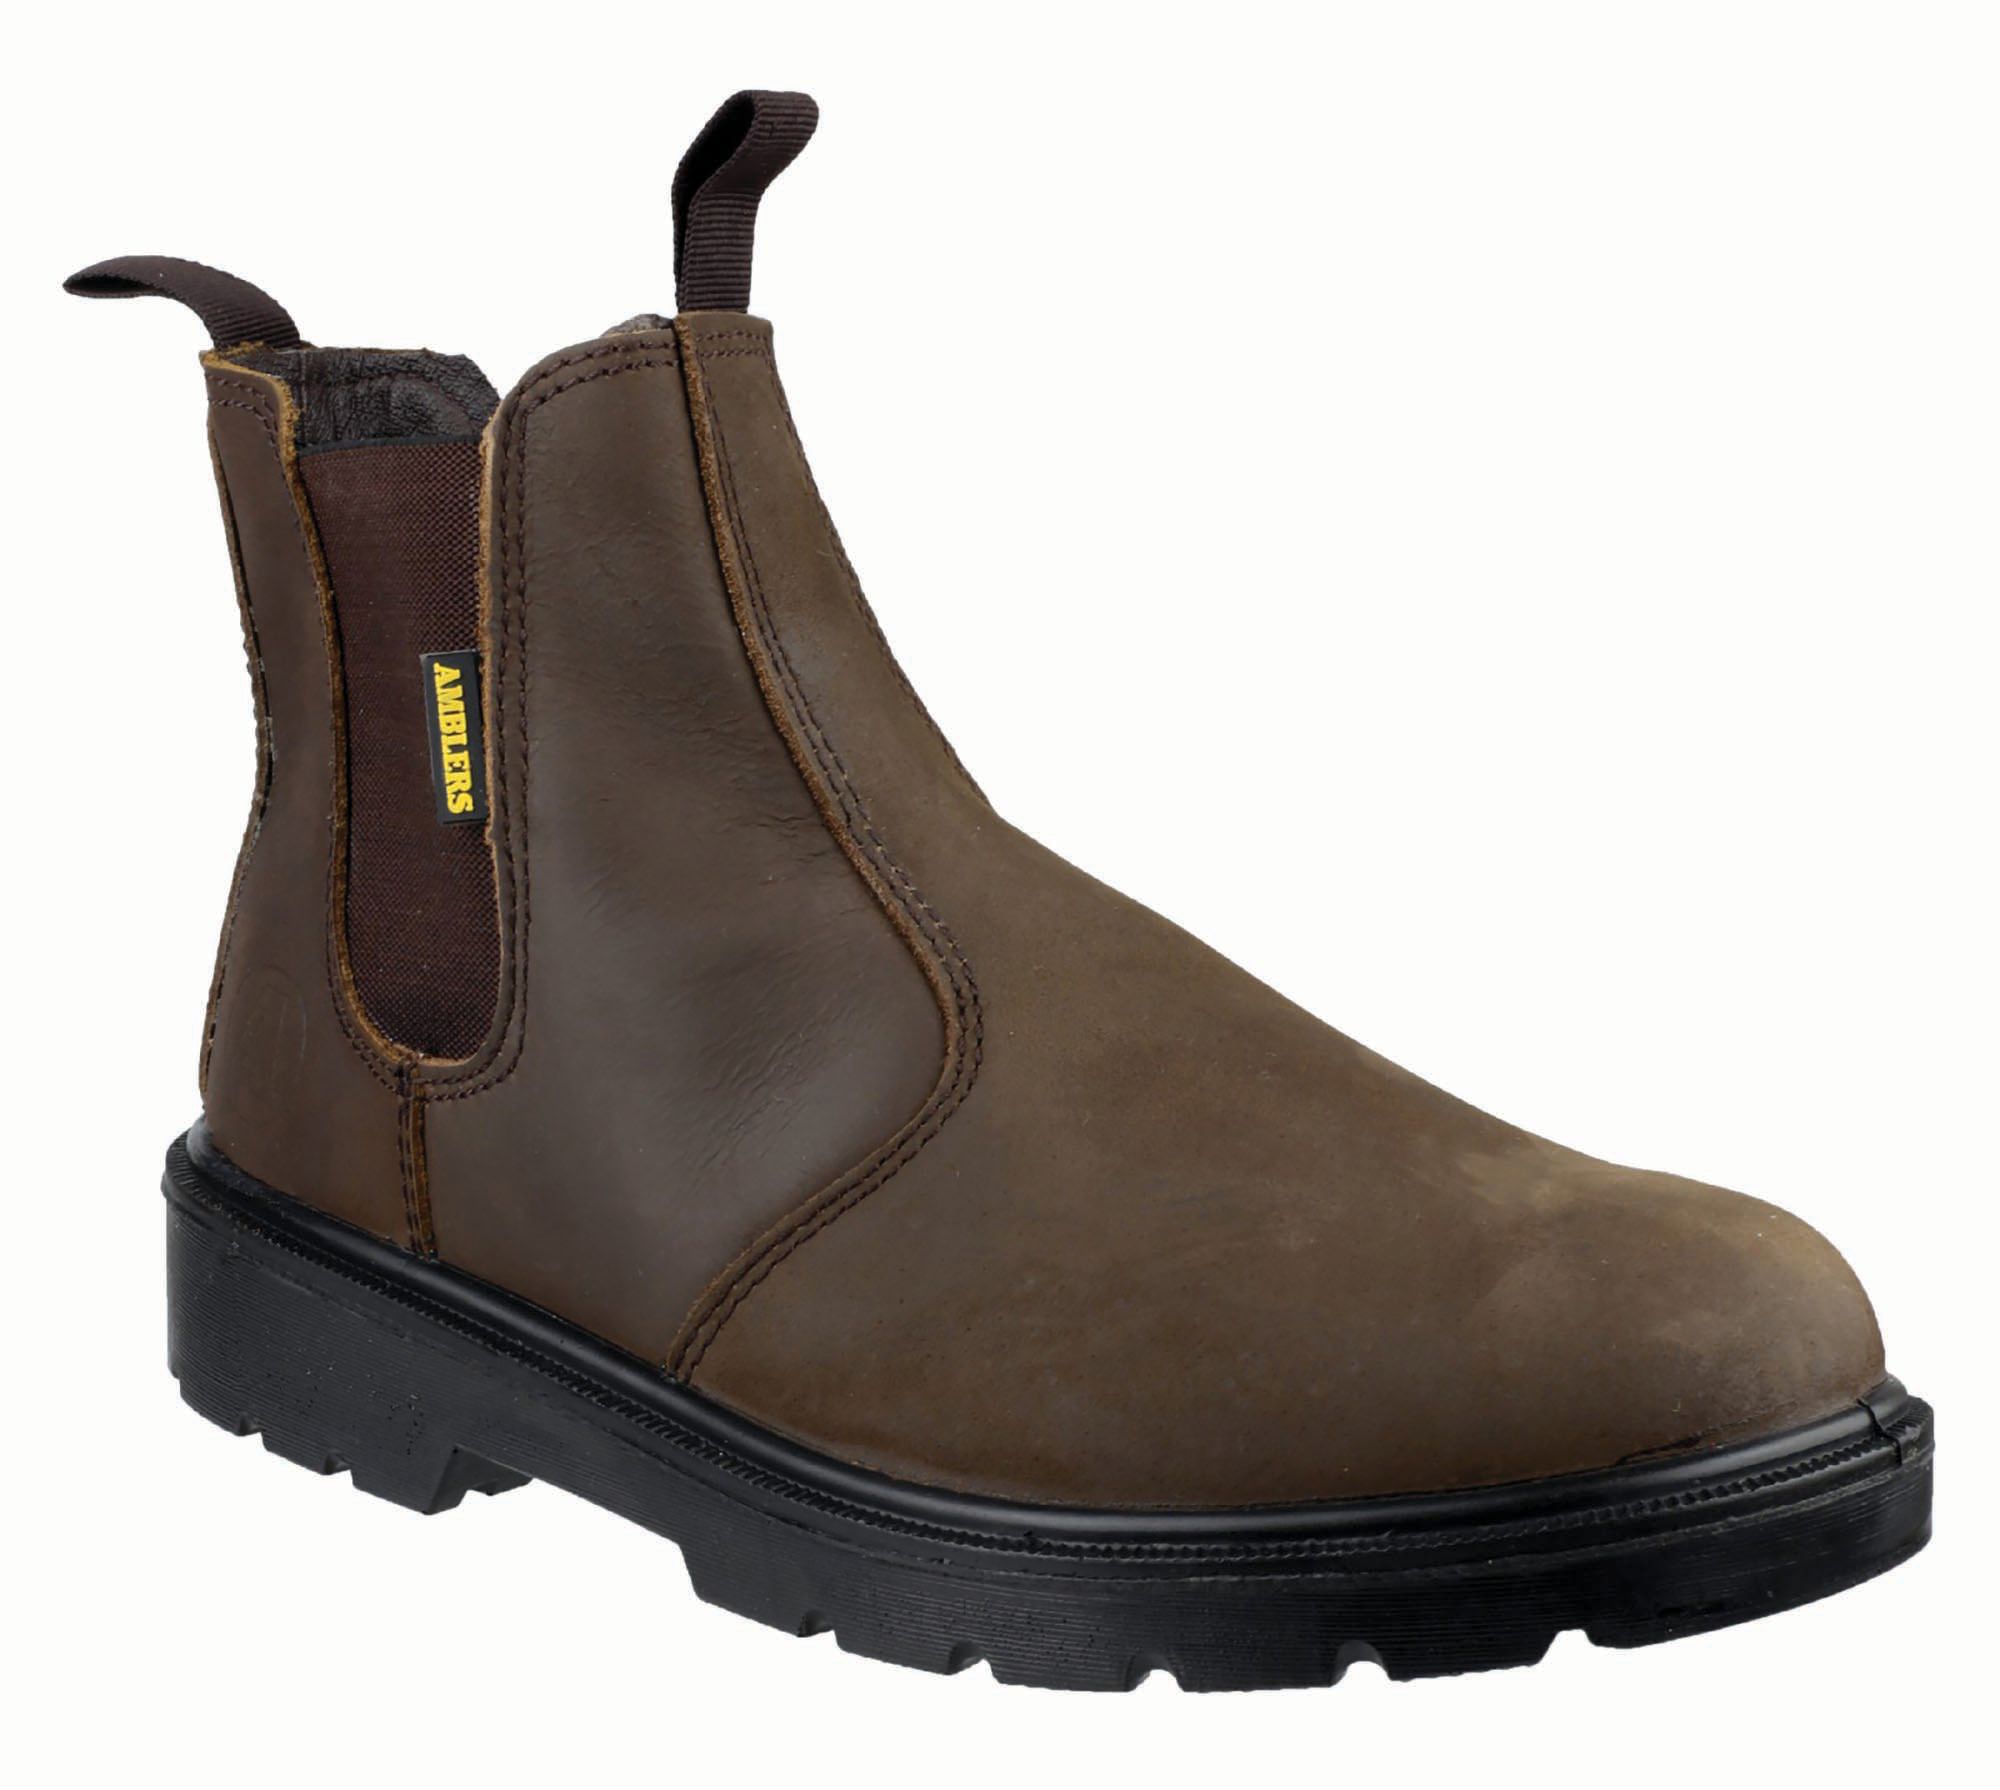 Image of Amblers Safety FS128 Dealer Safety Boot - Brown Size 4